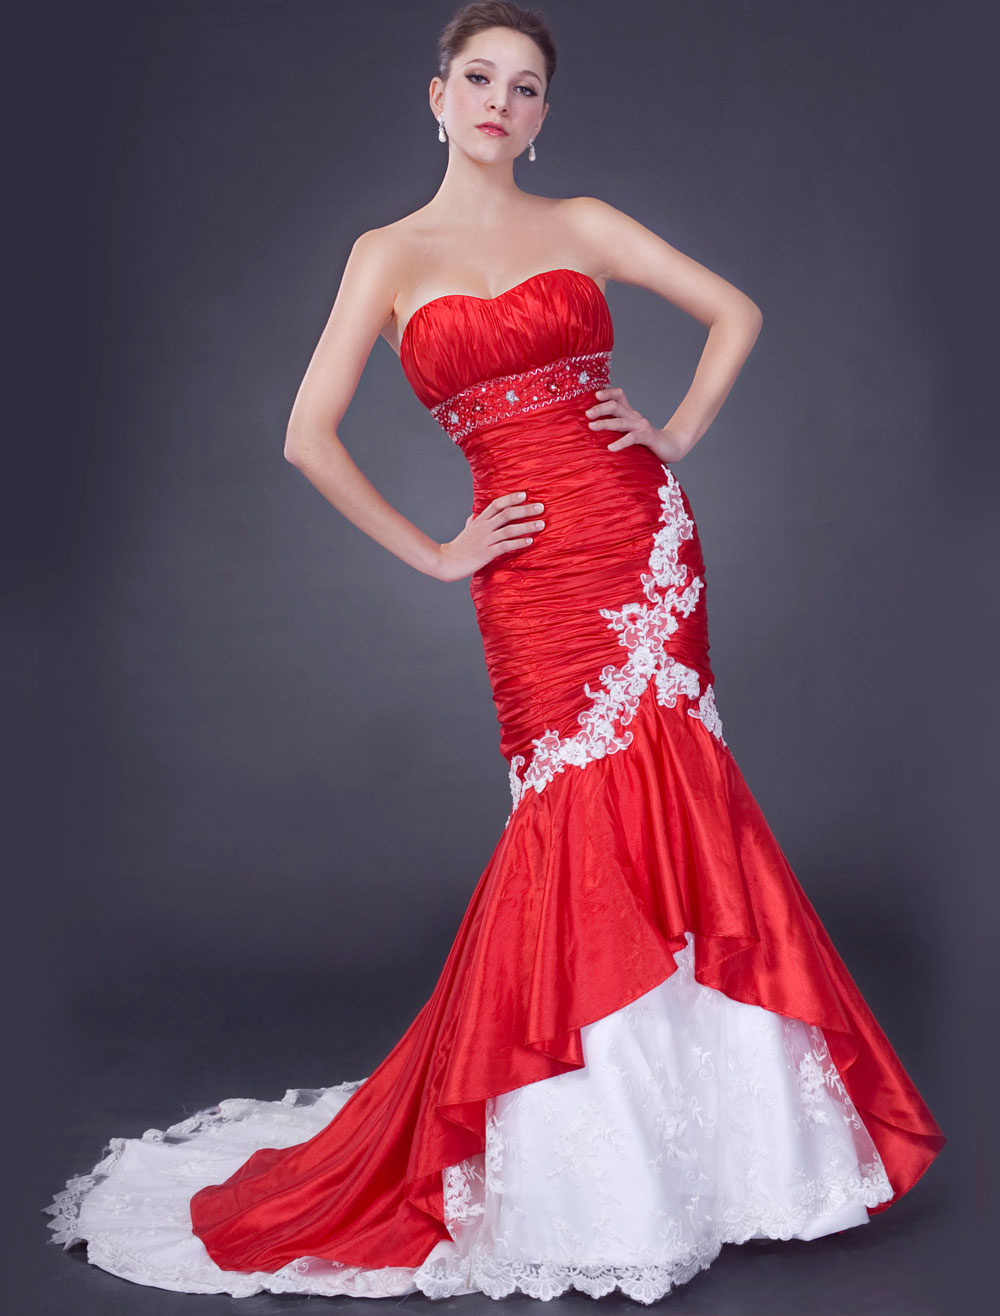 Wallpapers Background: Bridal Red Wedding Dresses | Bridal Dresses